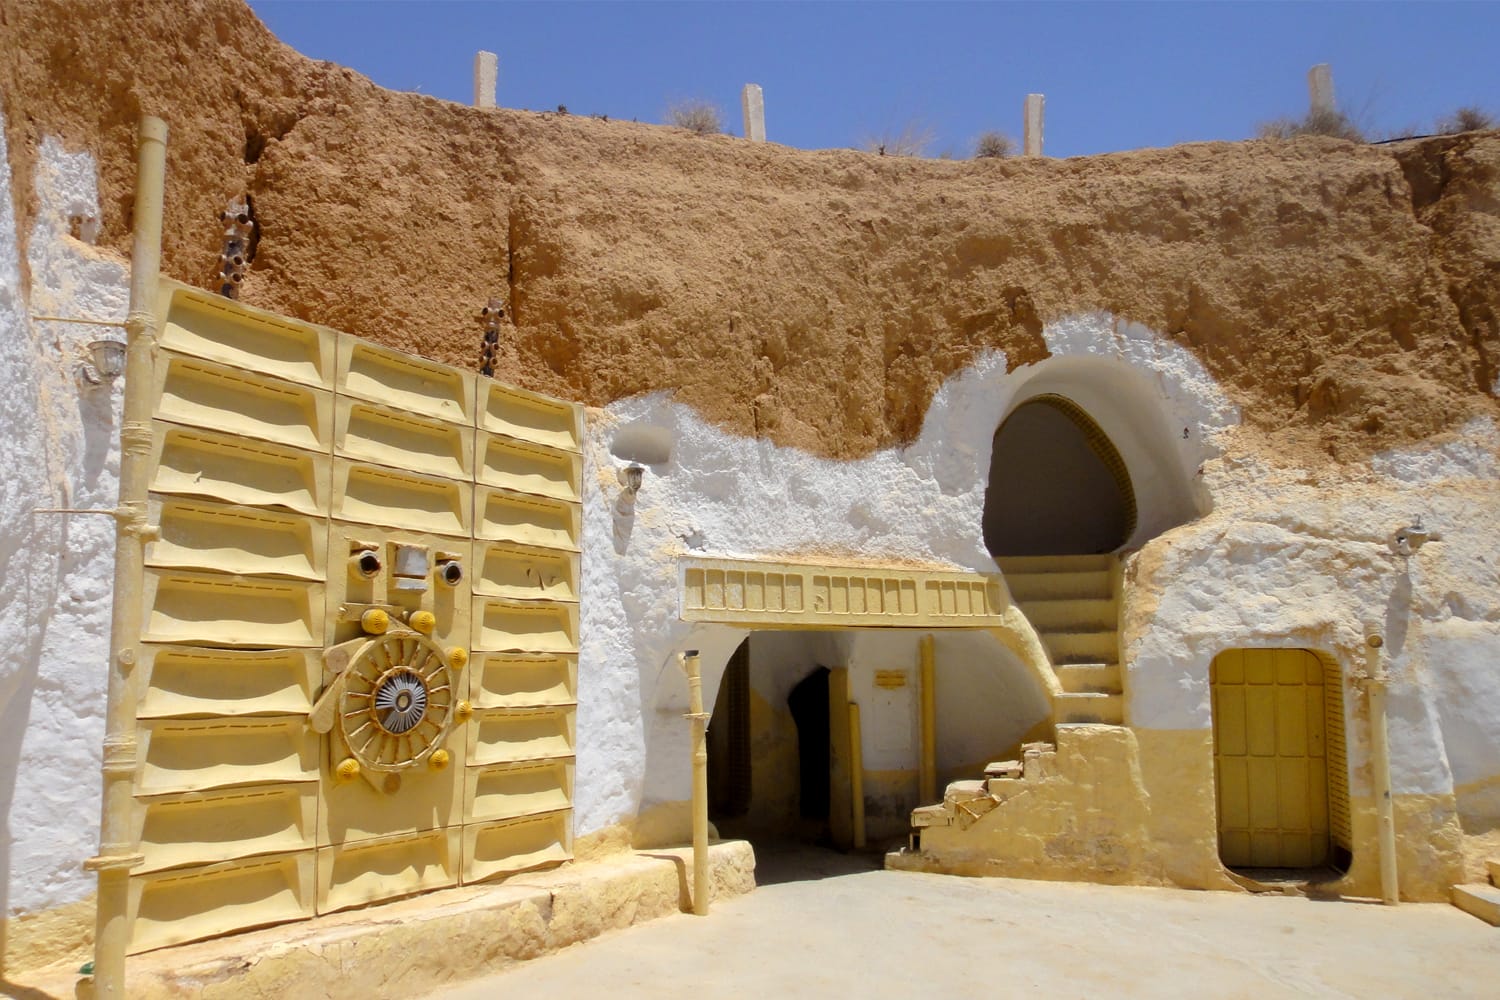 Troglodyte Homes / Υπόγειες Σπηλιές Βερβερίνων στο Sidi Driss, Matmata, Τυνησία